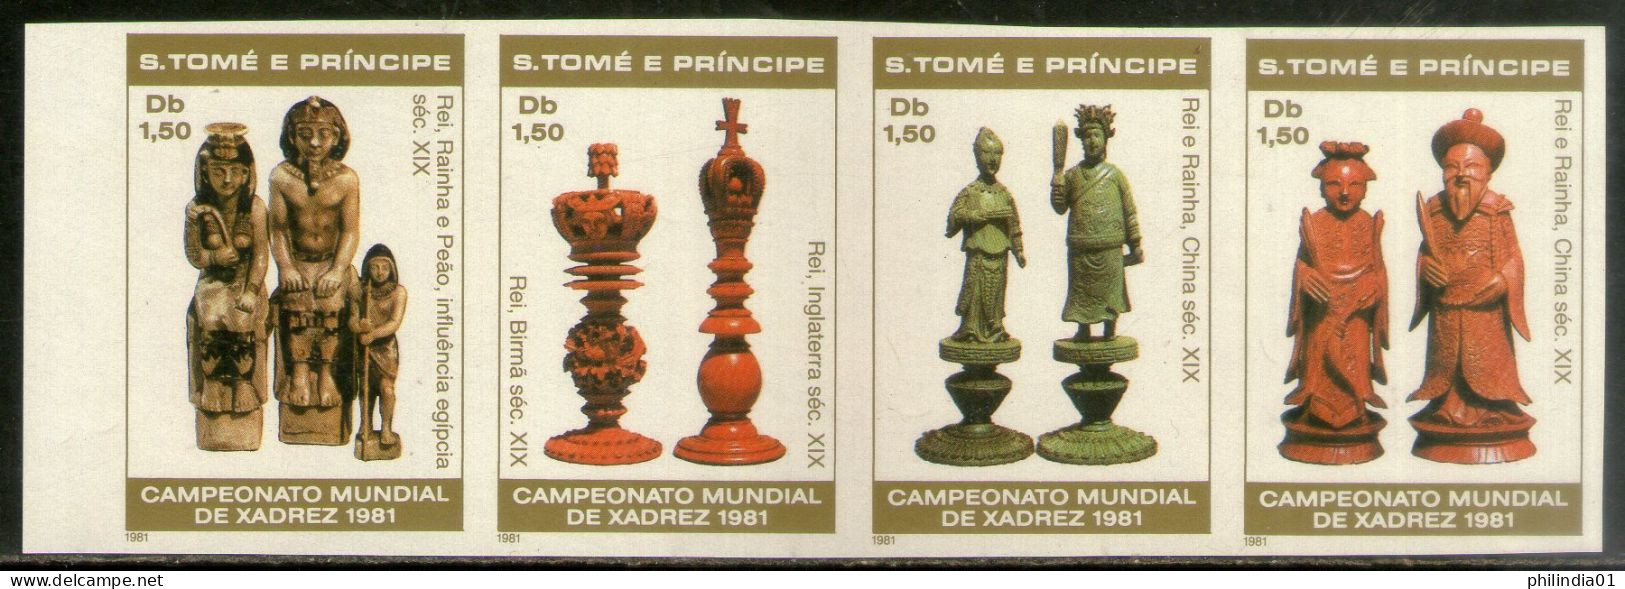 St. Thomas & Prince Is. 1981 World Chess Championship Games Sc 618-21 IMPERF Setenant MNH # 5403 - Echecs